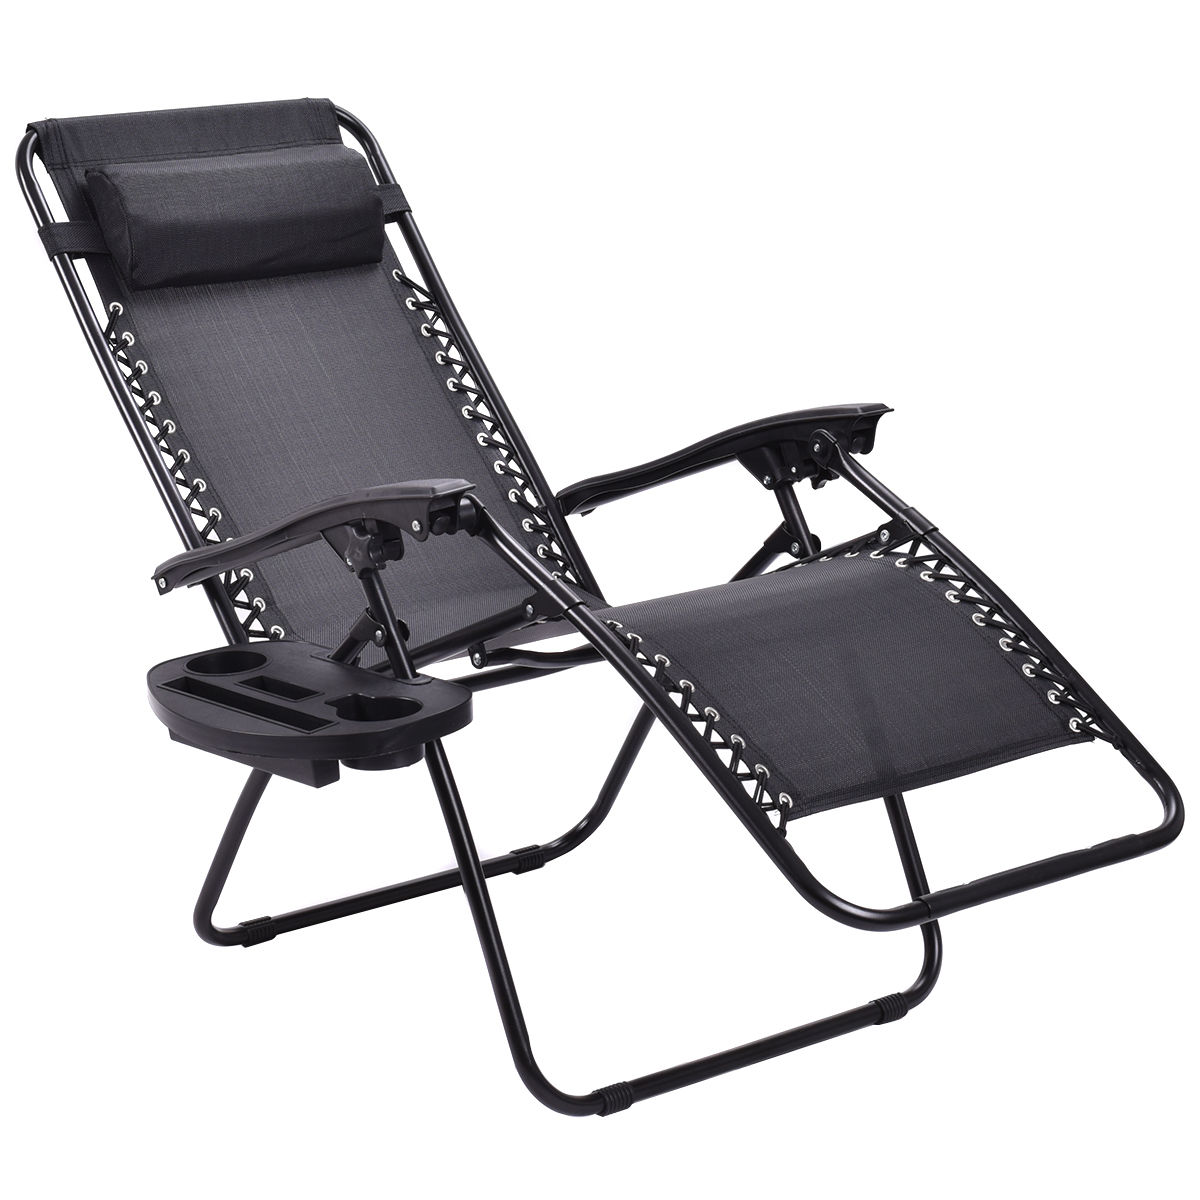 Topbuy 2PC Zero Gravity Chair Adjustable Recliners Textiliene Black - image 3 of 6